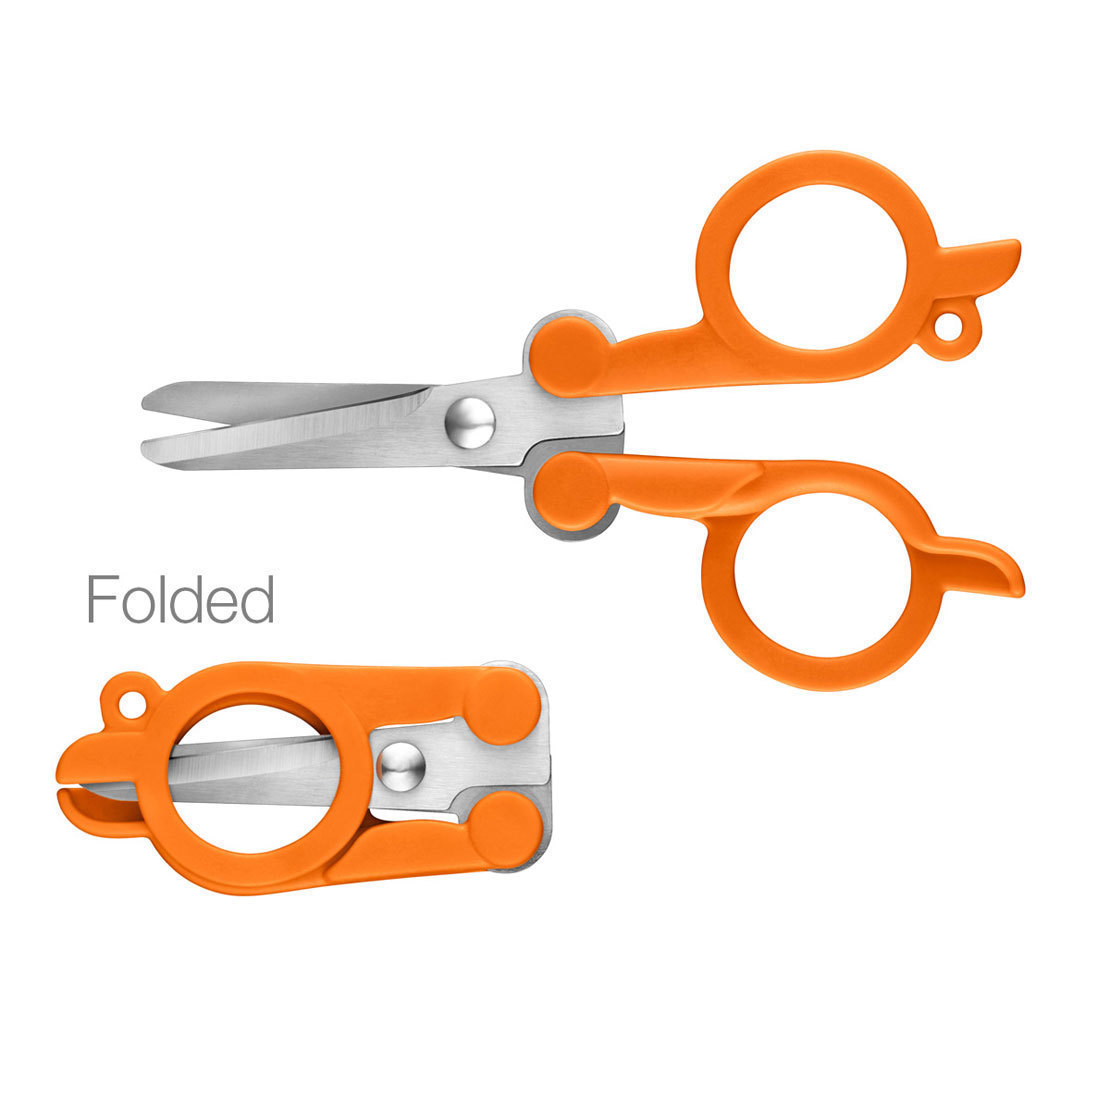 Folding Scissors 4 